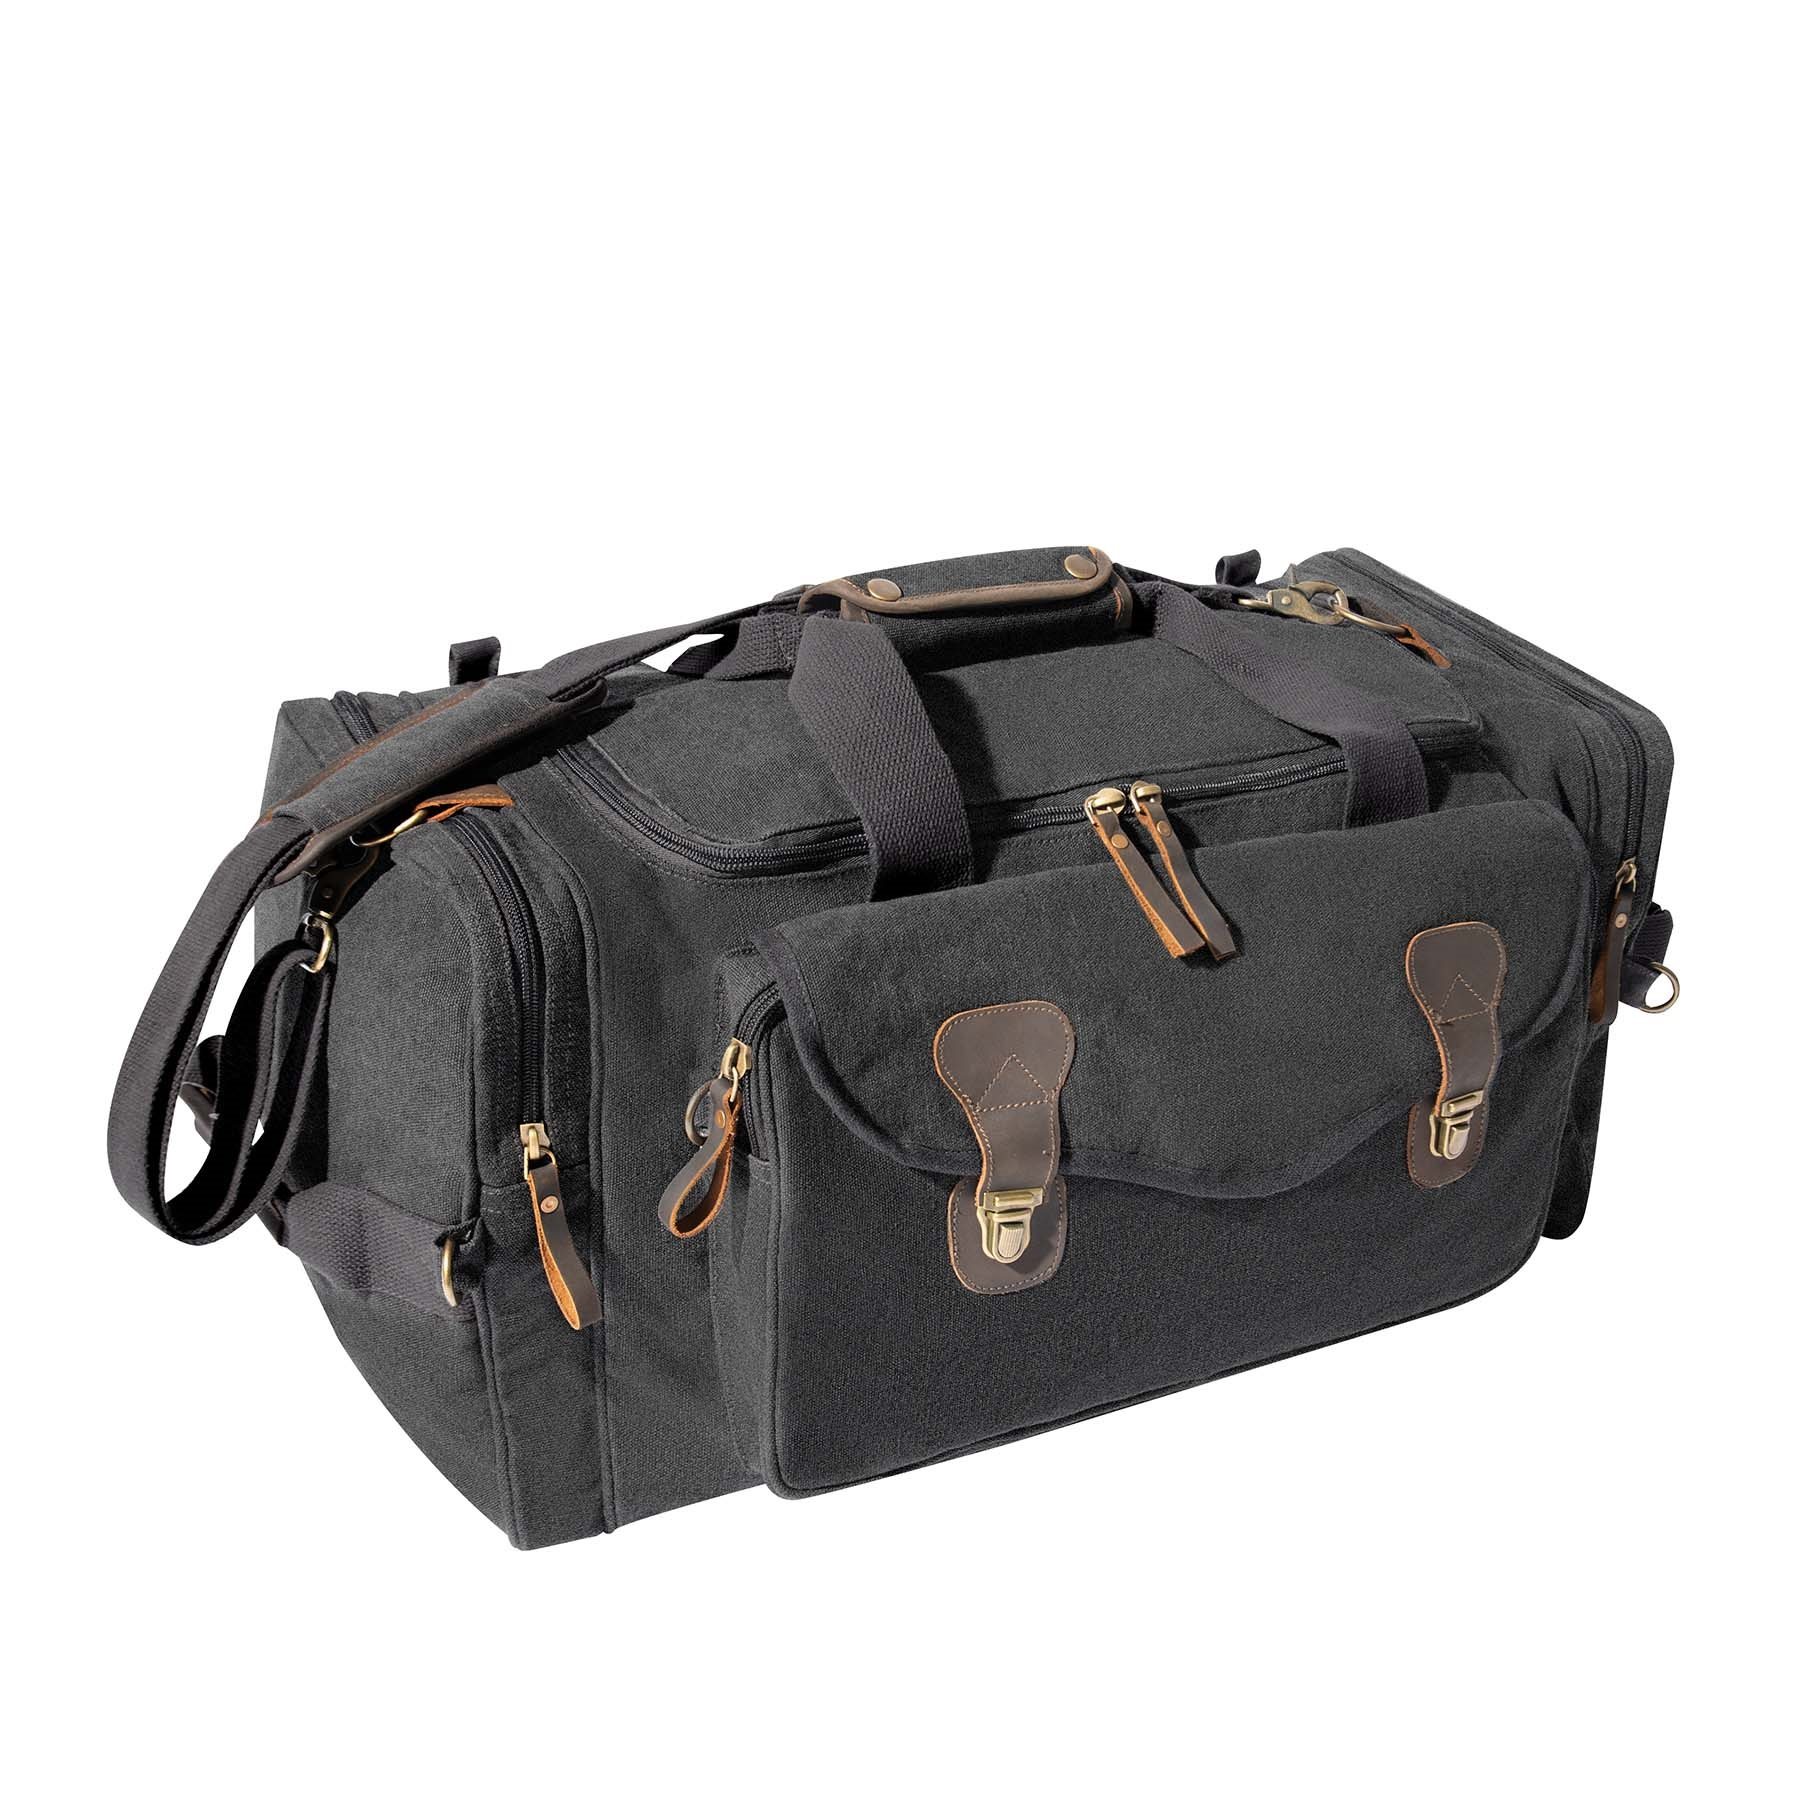 ROTHCO Shoulder bag with pockets CHARCOAL GREY | MILITARY RANGE